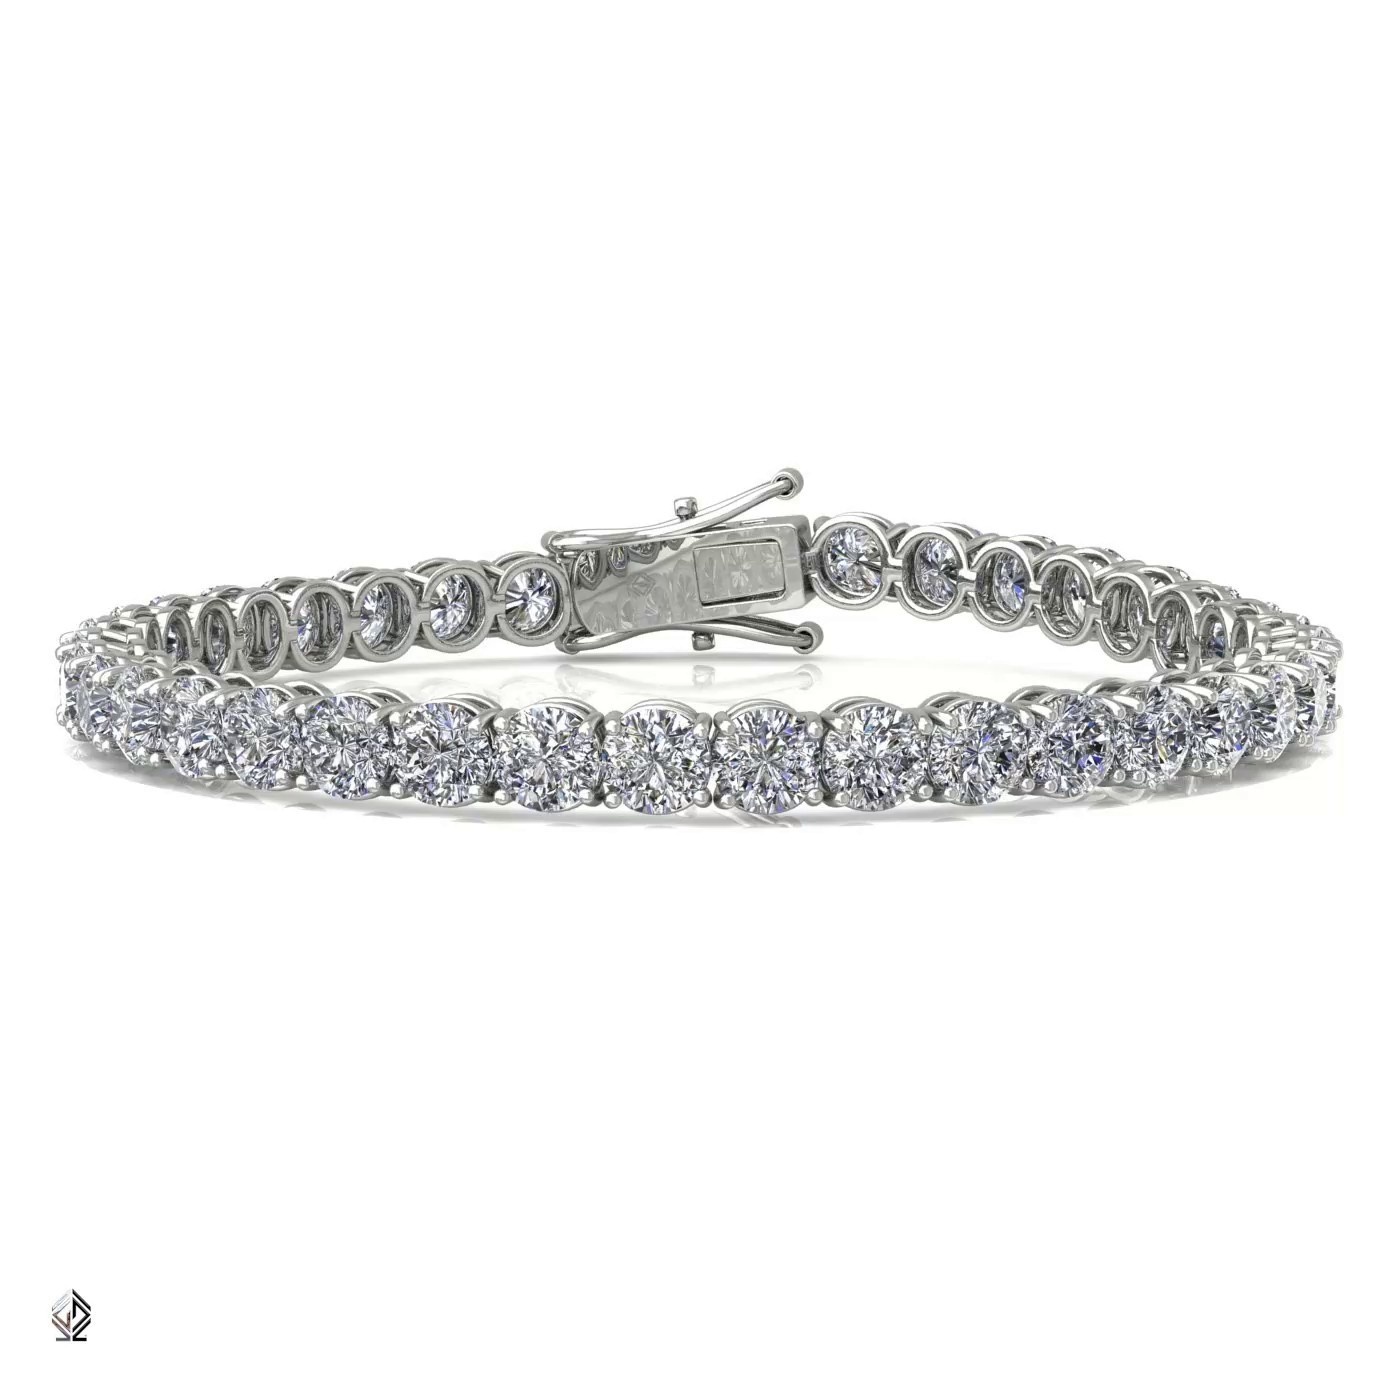 18k white gold 3.8mm 4 prong round shape diamond tennis bracelet in round setting Photos & images